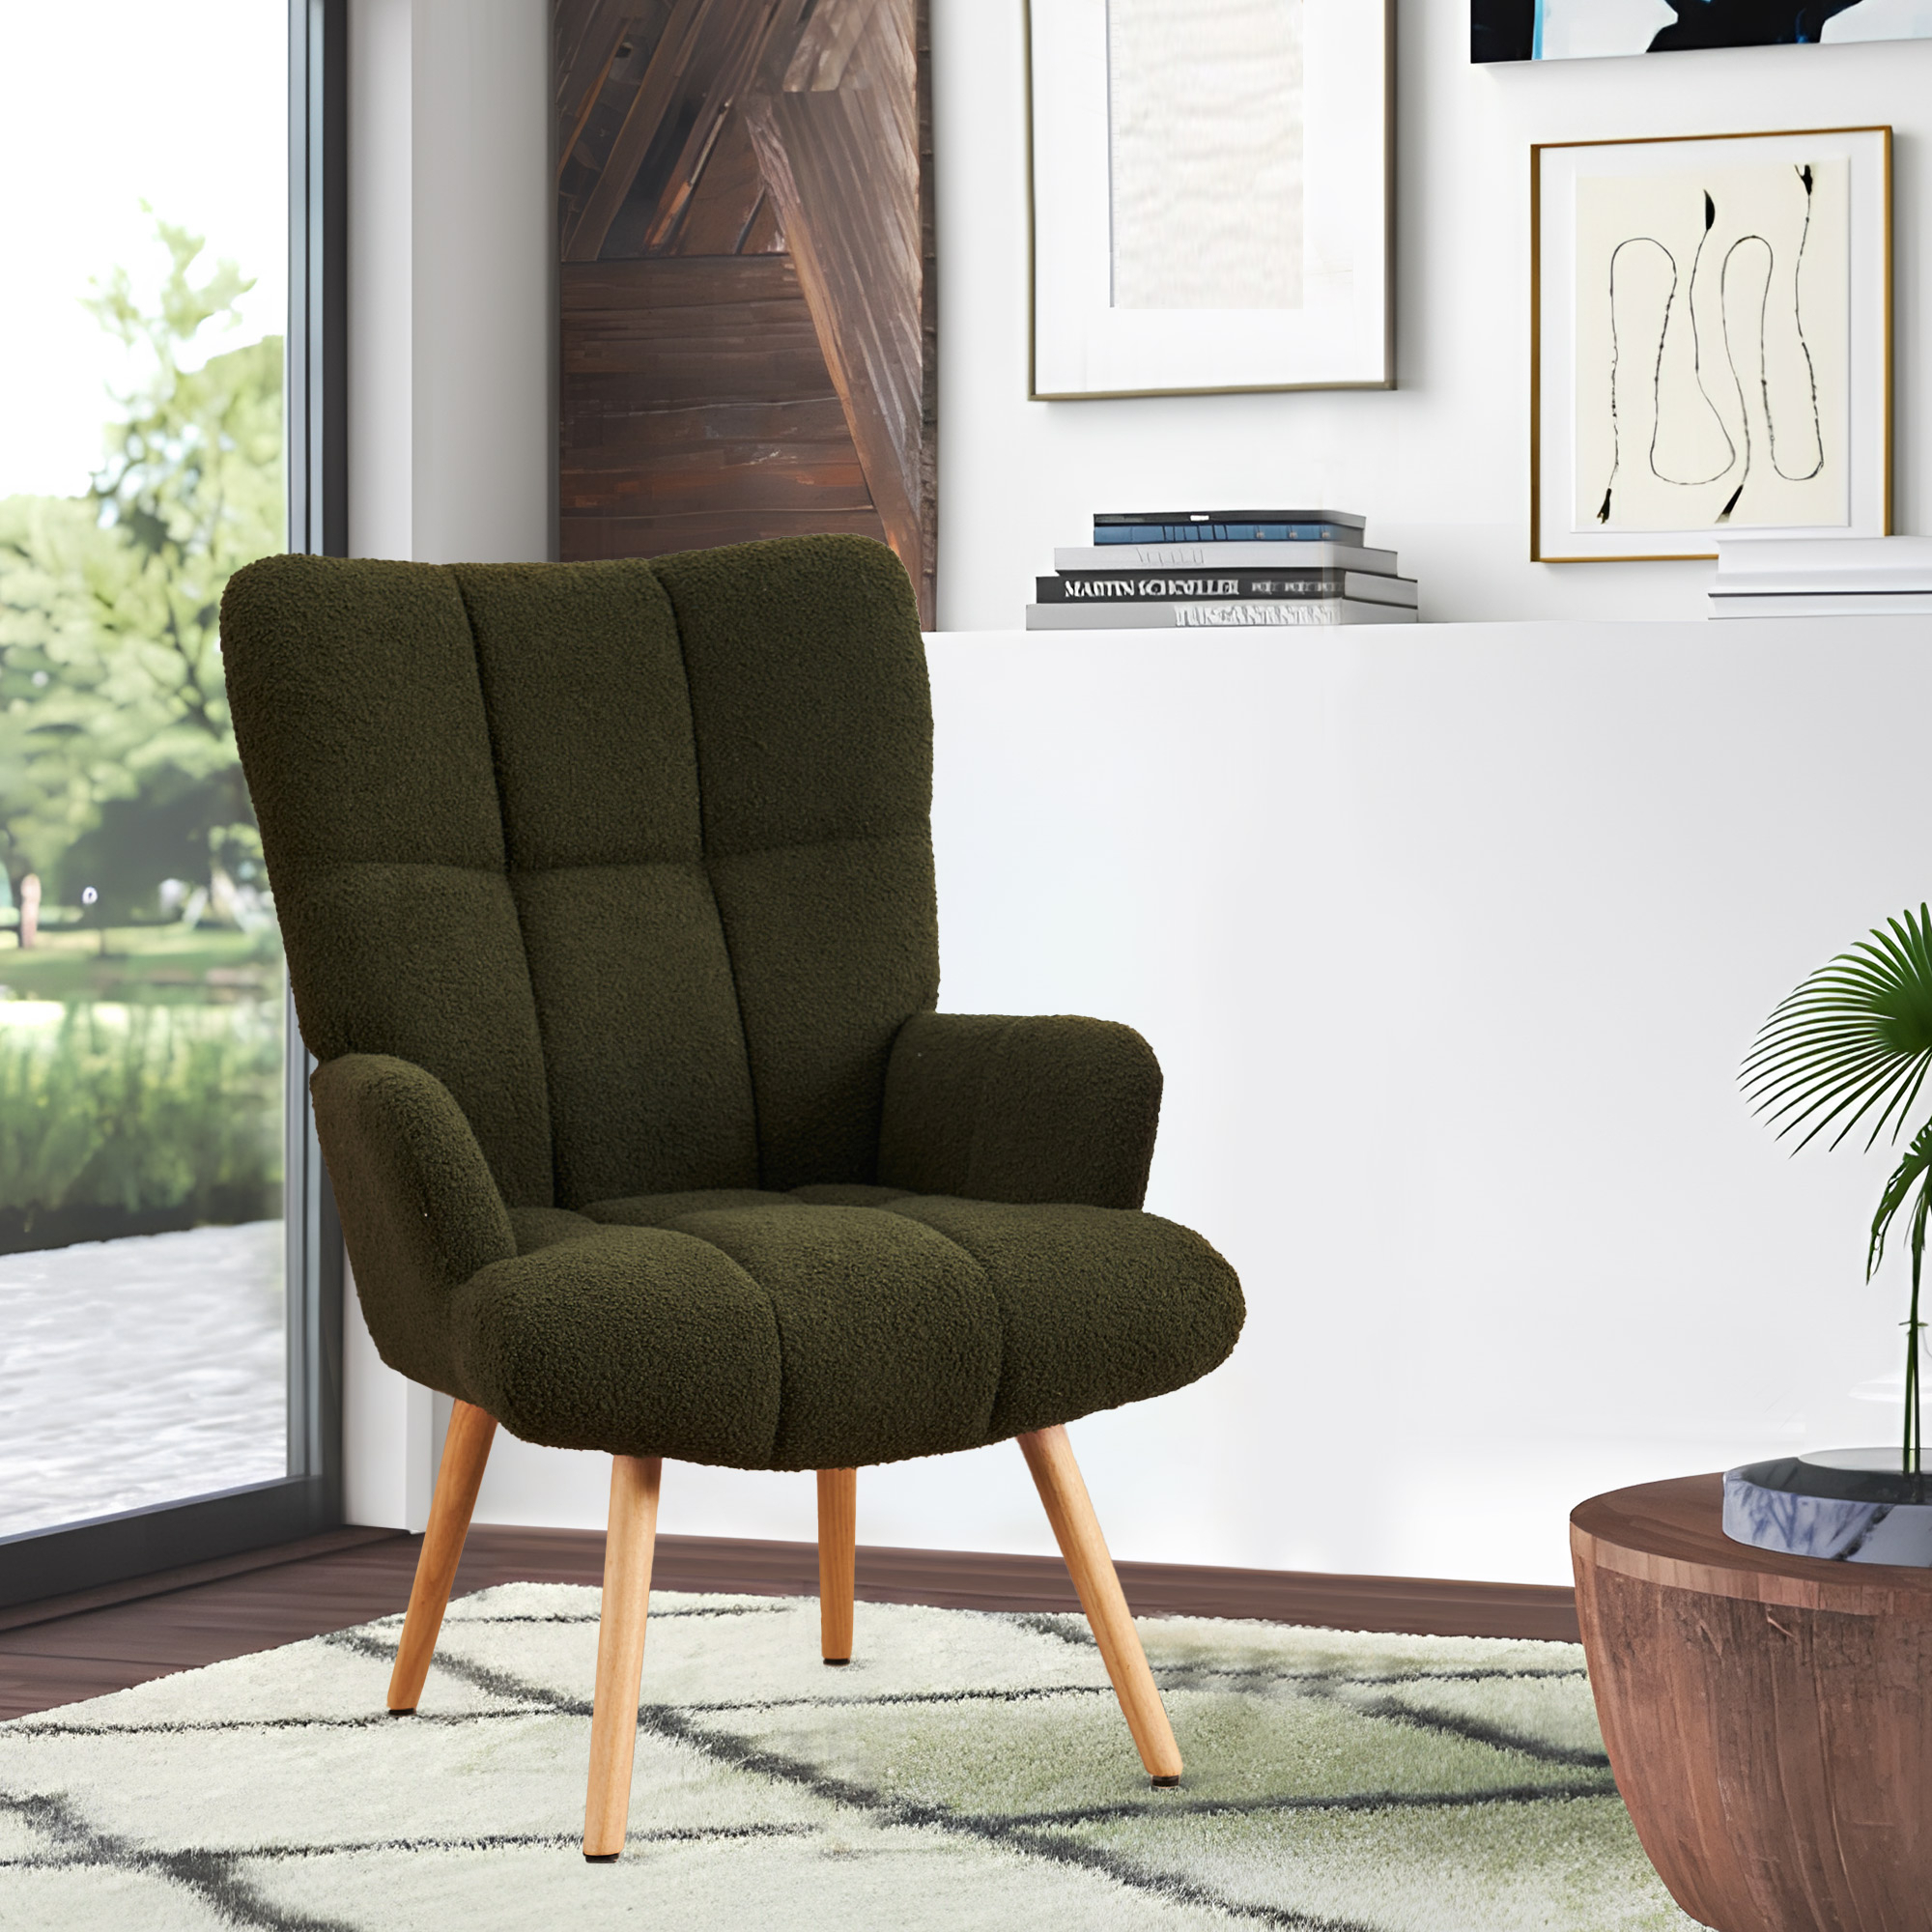 Luxurious Teddy Velvet Accent Chair, High Back Chair Modern Accent Chair Soft Comfy Living Room Chair